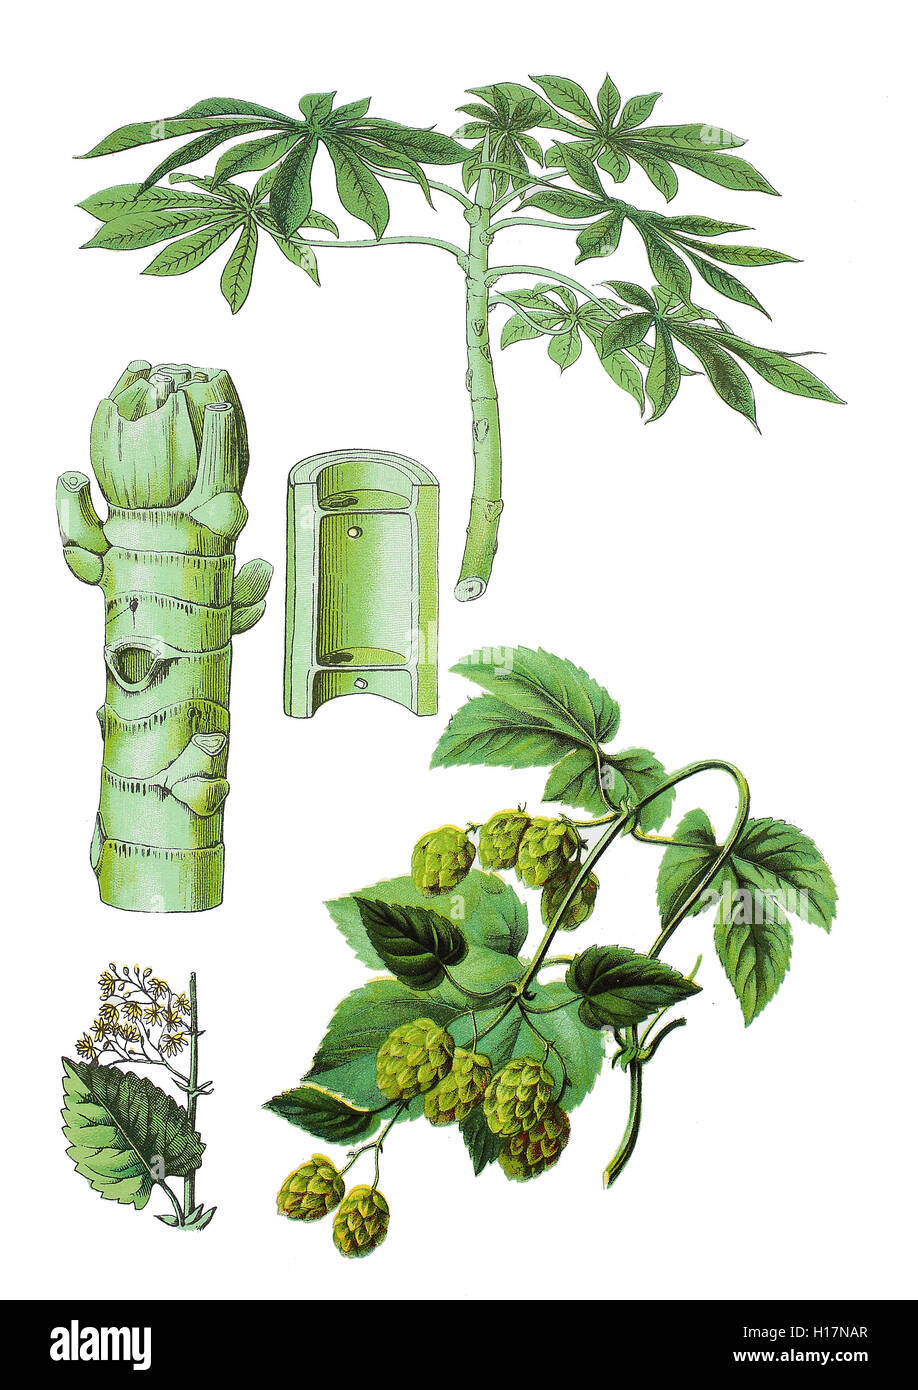 Ameisenbaum, Cecropia palmata (enlaces mitte und oben), Echte Hopfe, Humulus lupulus (UNTEN) Foto de stock